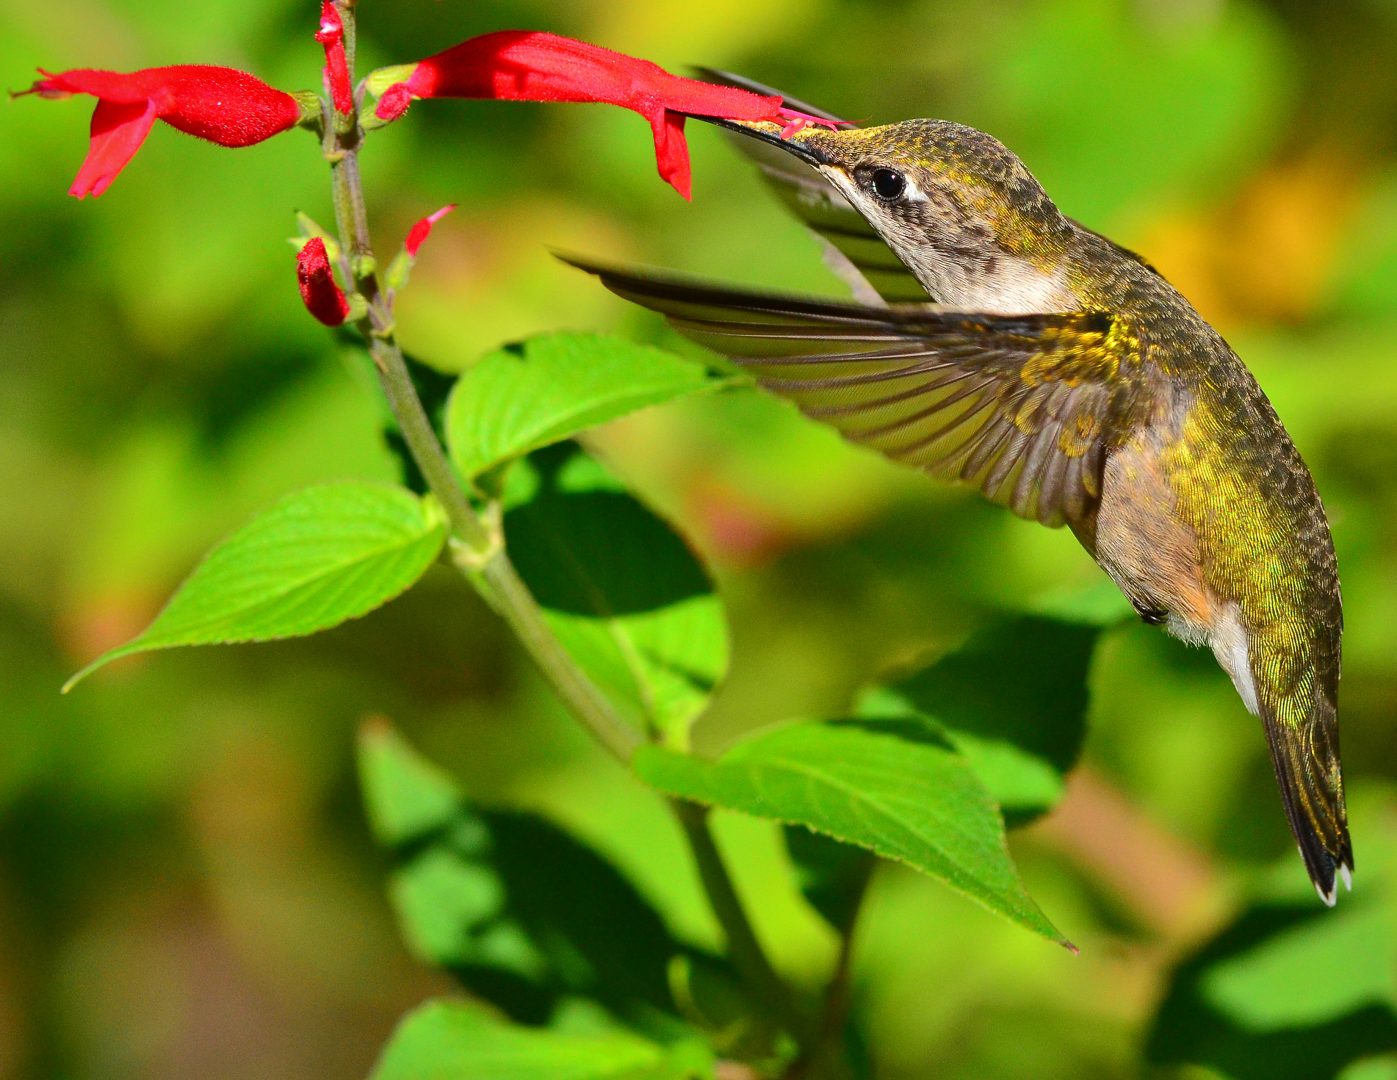 Hummingbird with its beak inside a red flower